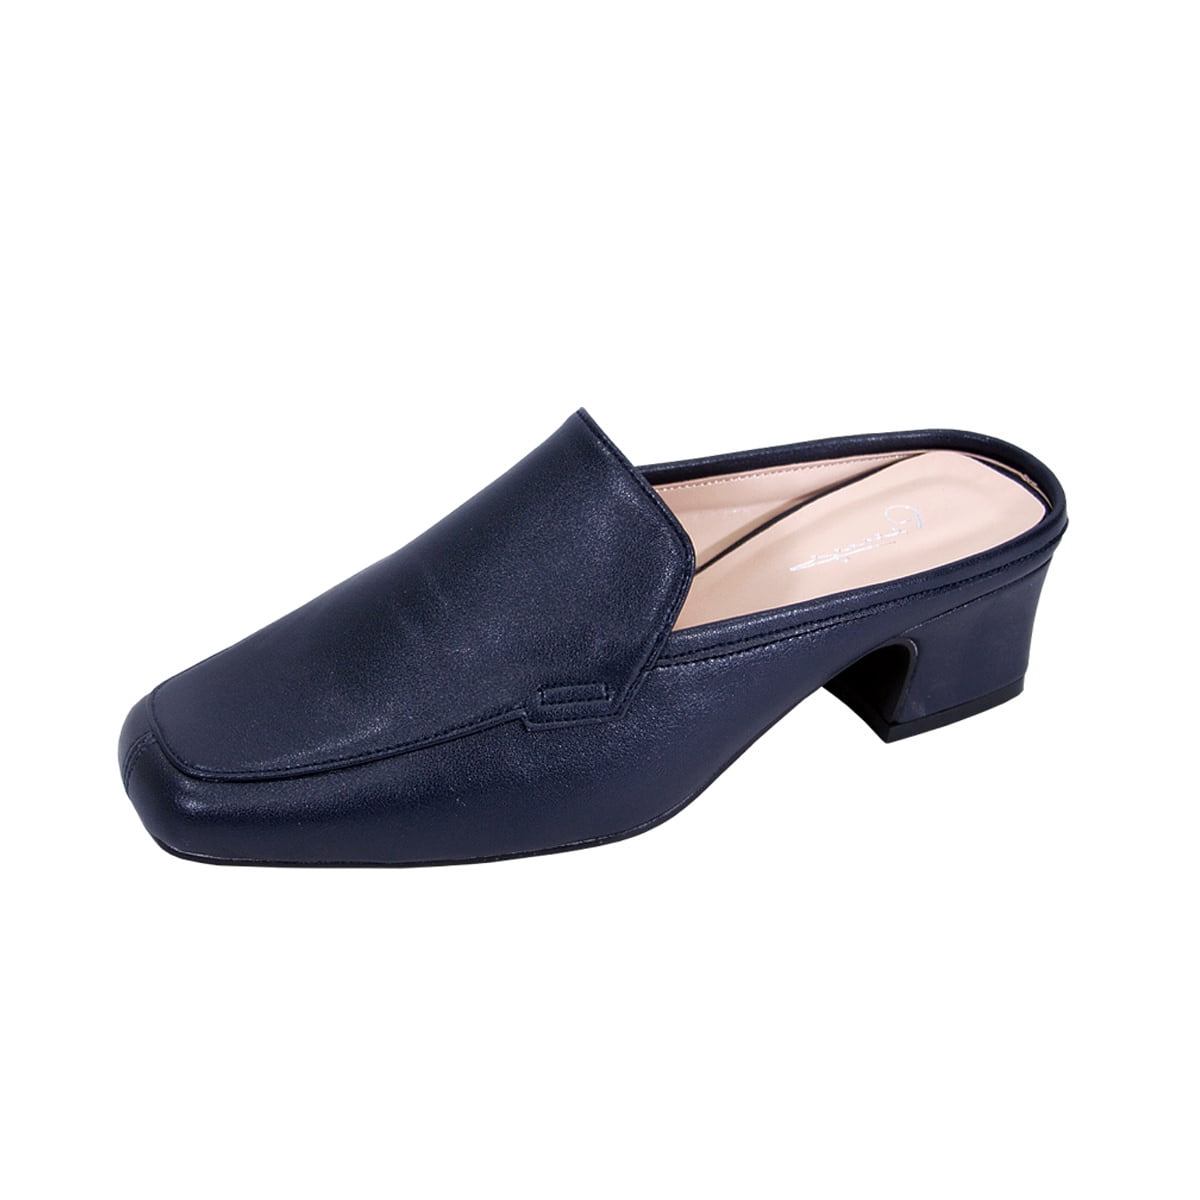 navy blue dress shoes wide width